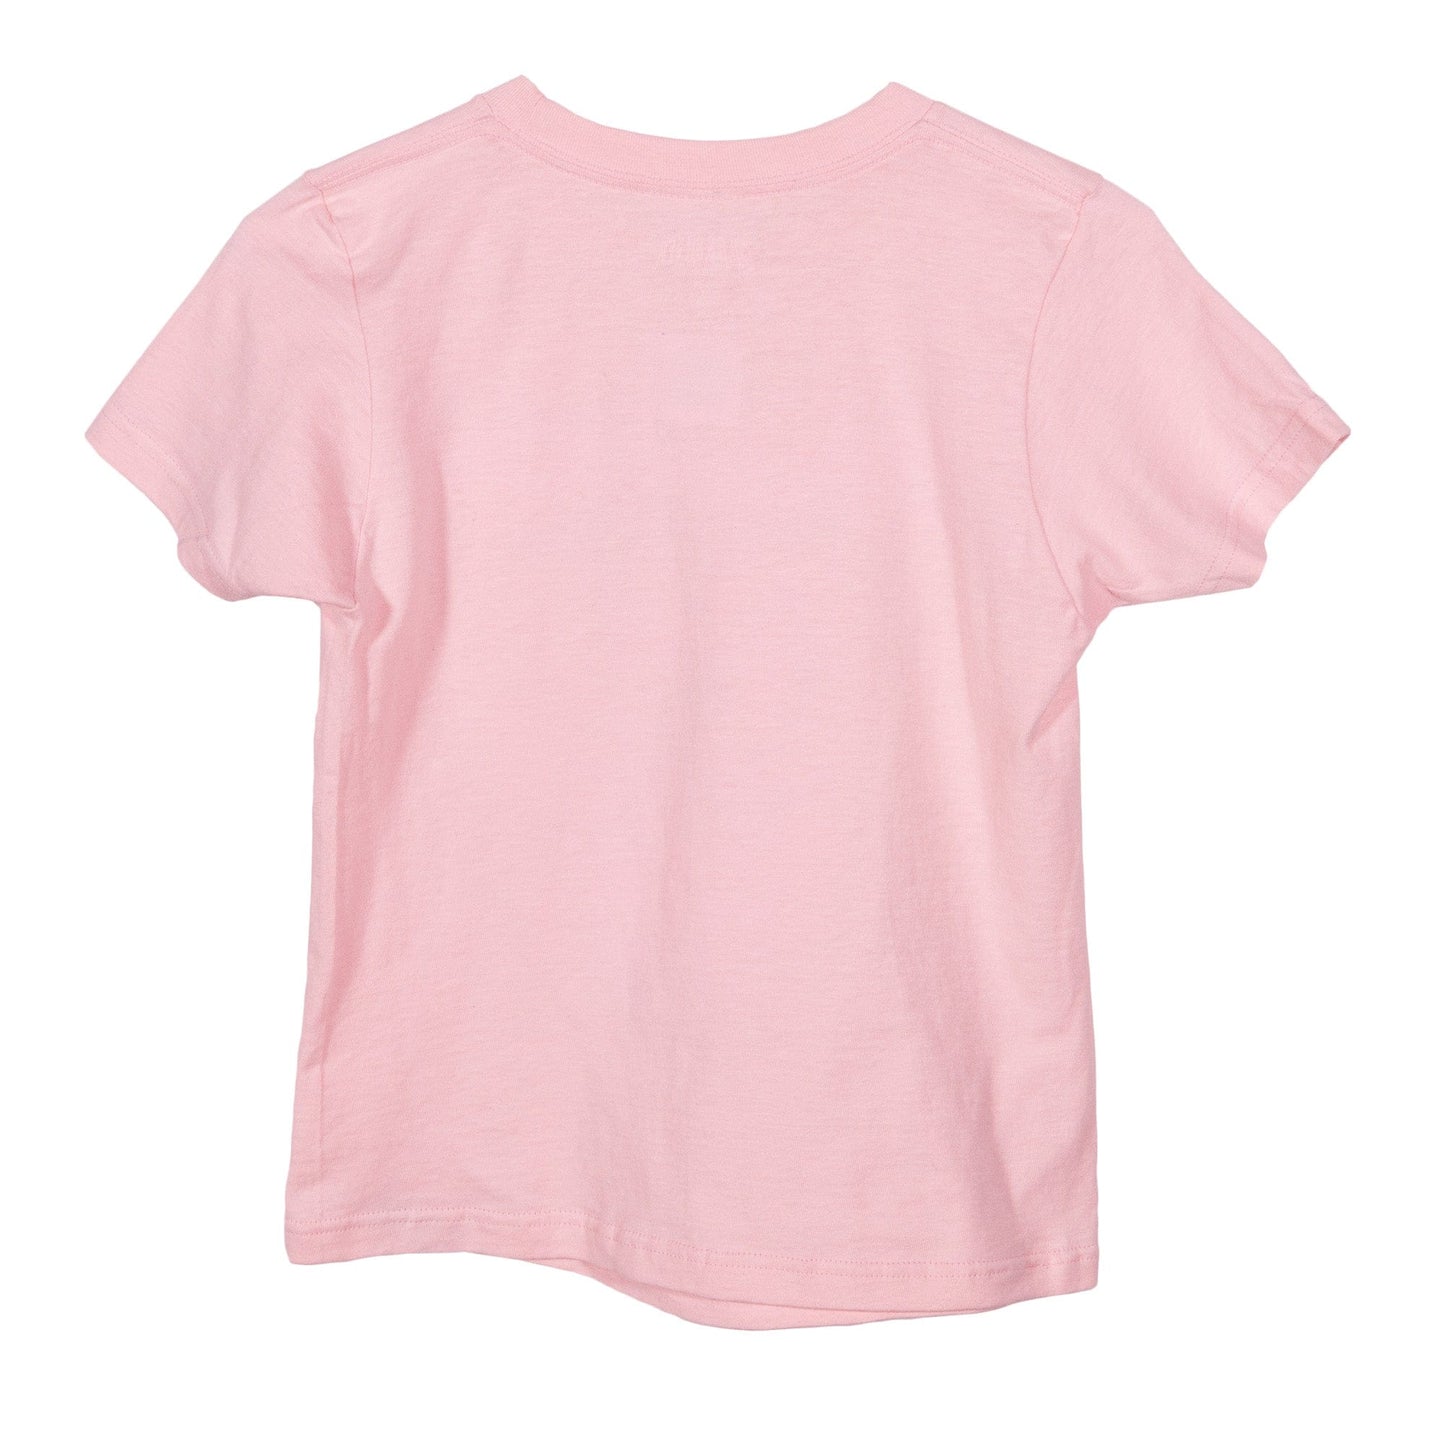 Kids "Pinkychew" T-Shirt Plain